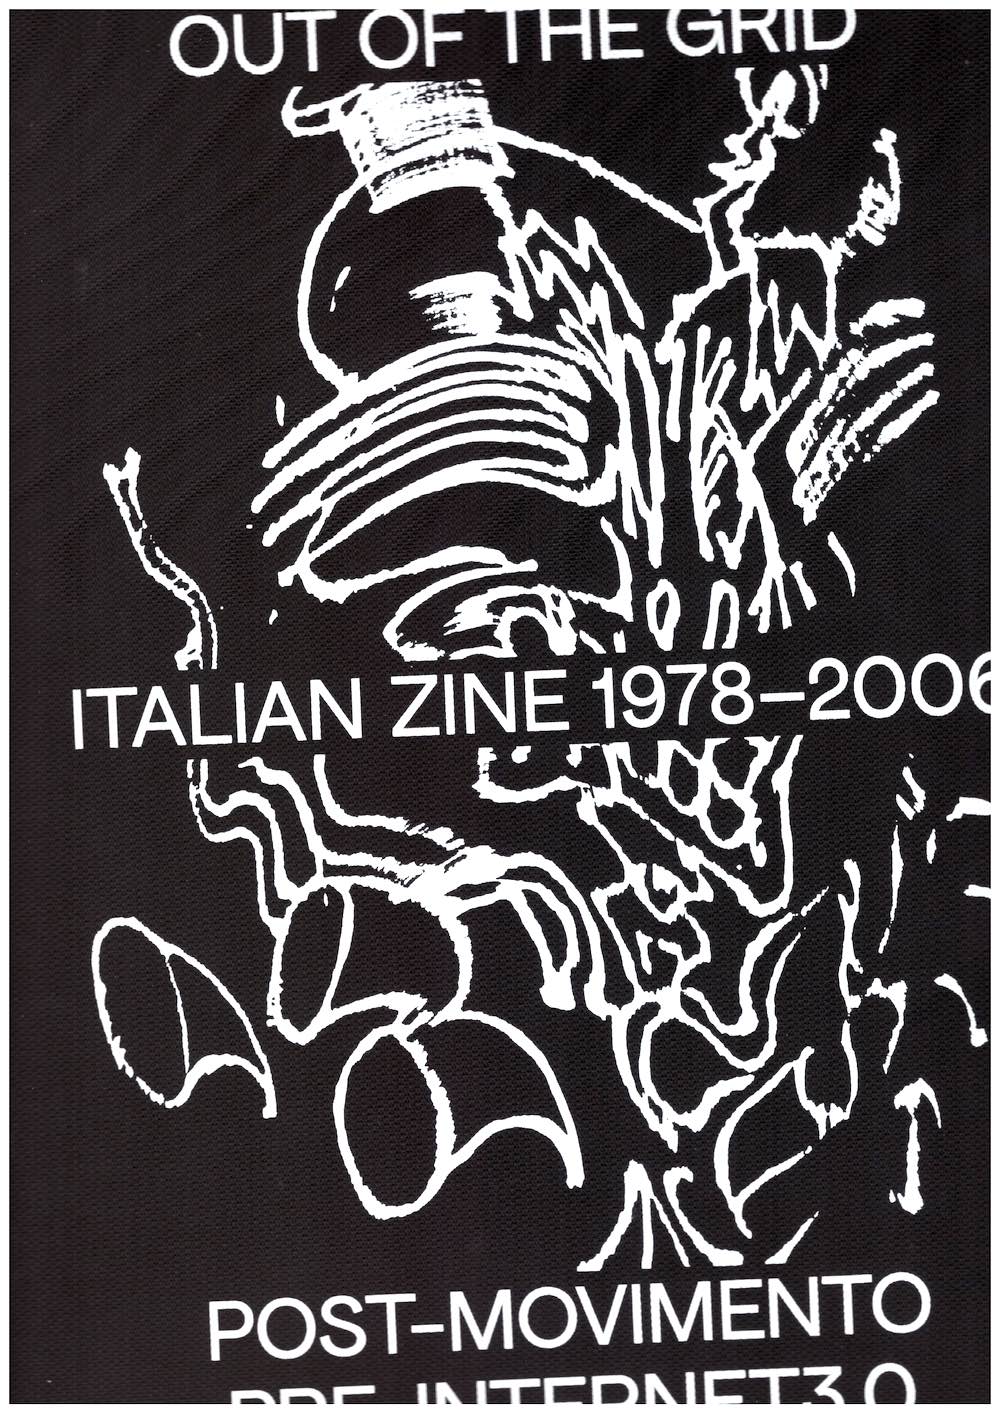 BOGGERI, Dafne; SERIGHELLI, Sara (eds.) - Out of the Grid – Italian Zine 1978-2006